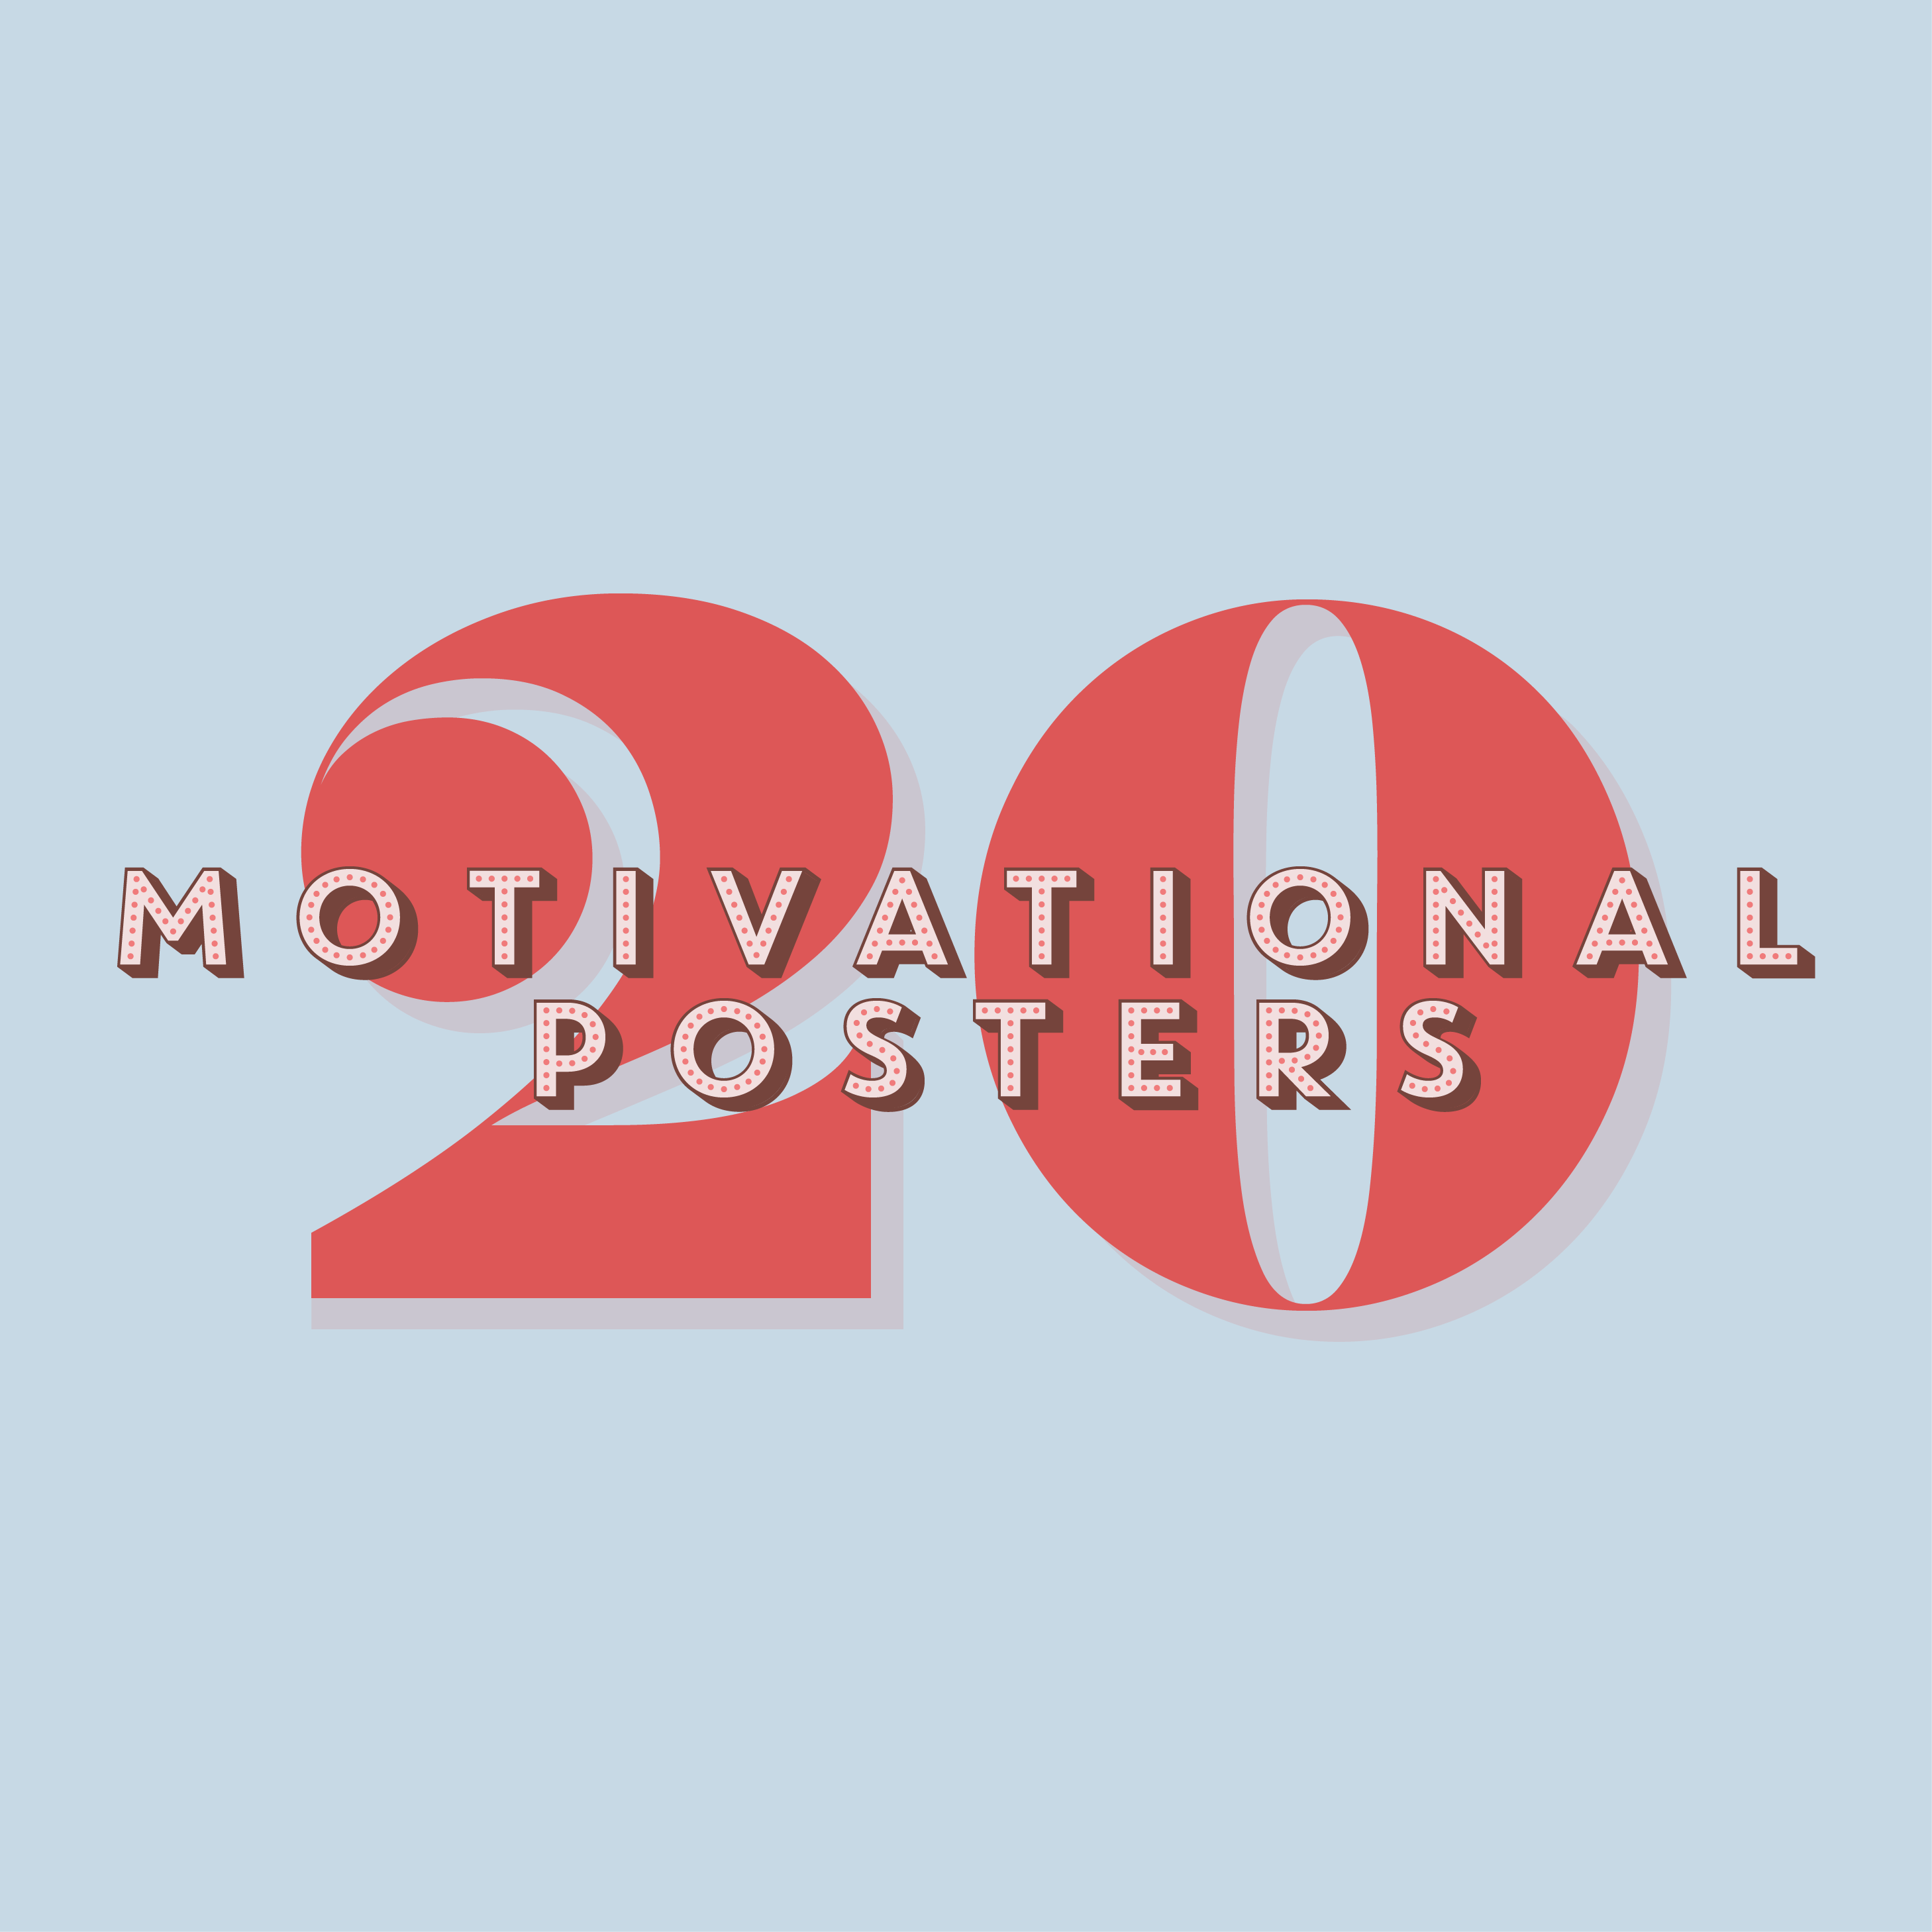 Got Motives Logo - motivational posters to get you through a slump